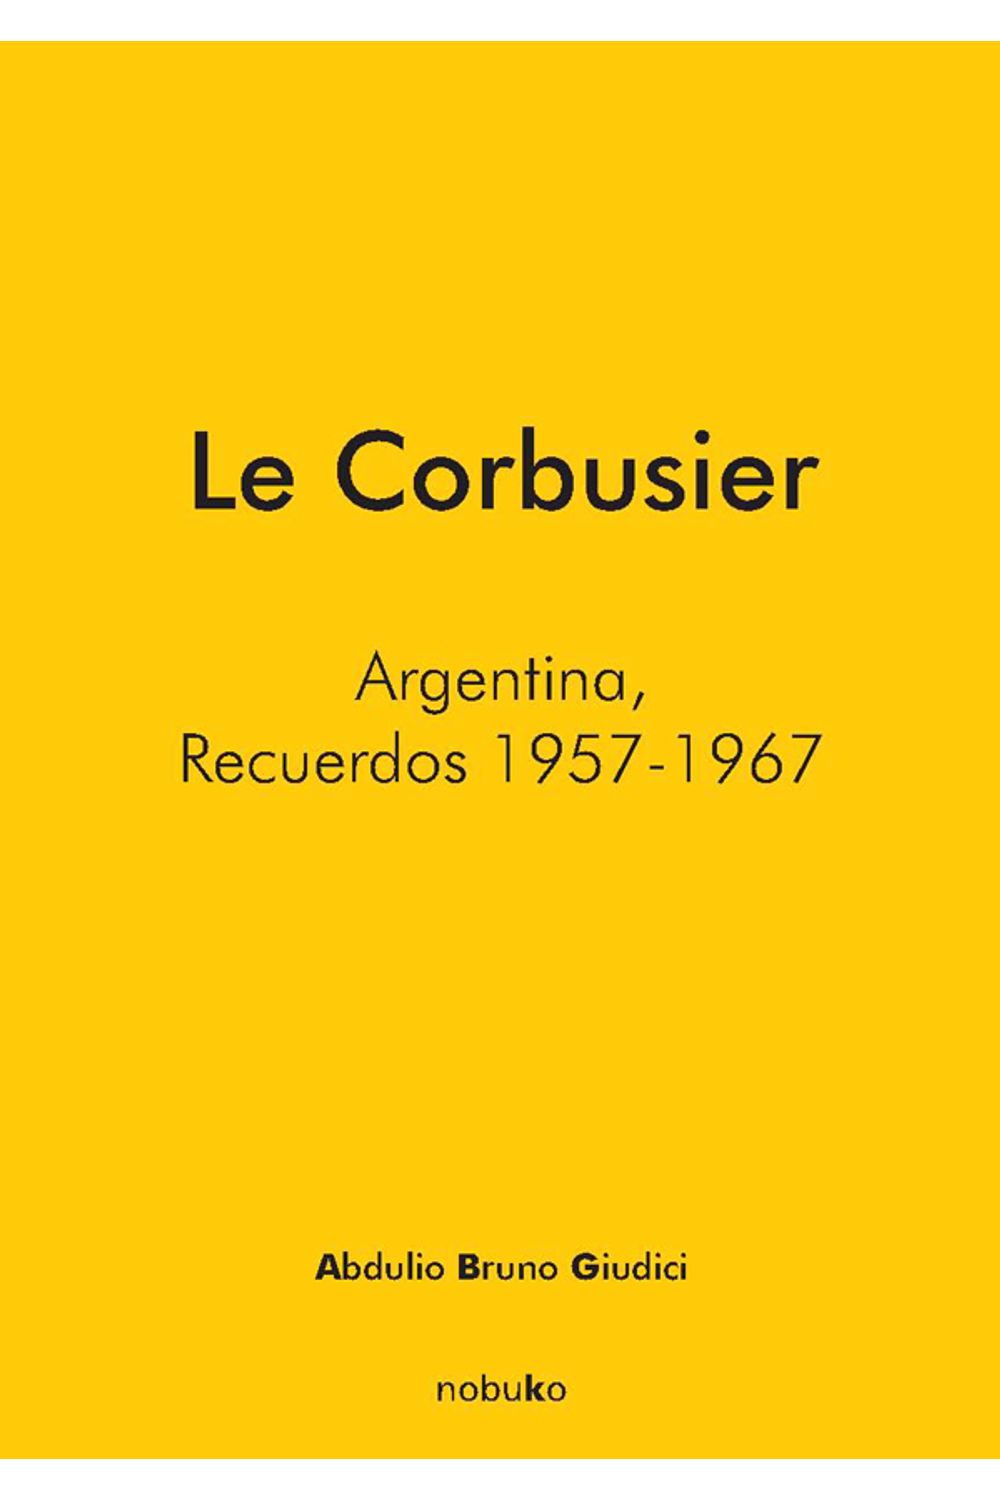 bm-le-corbusier-argentina-nobukodiseno-editorial-9789875841741